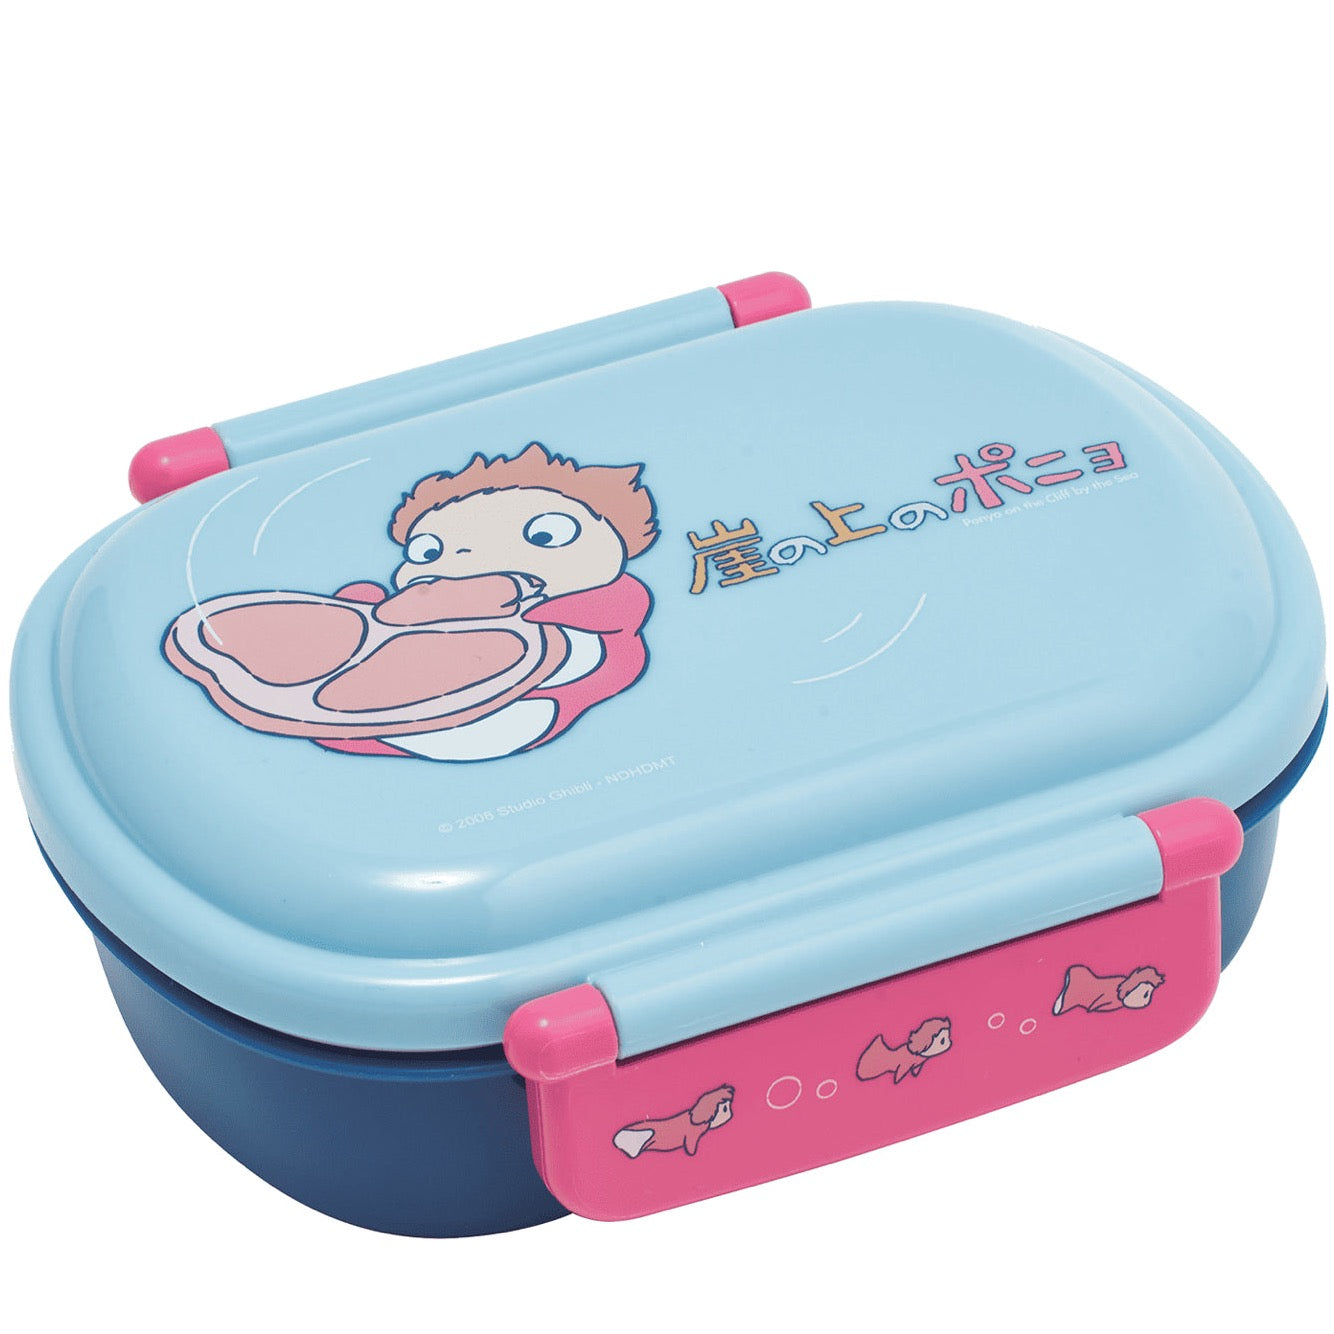 Ponyo Bento Lunch Box